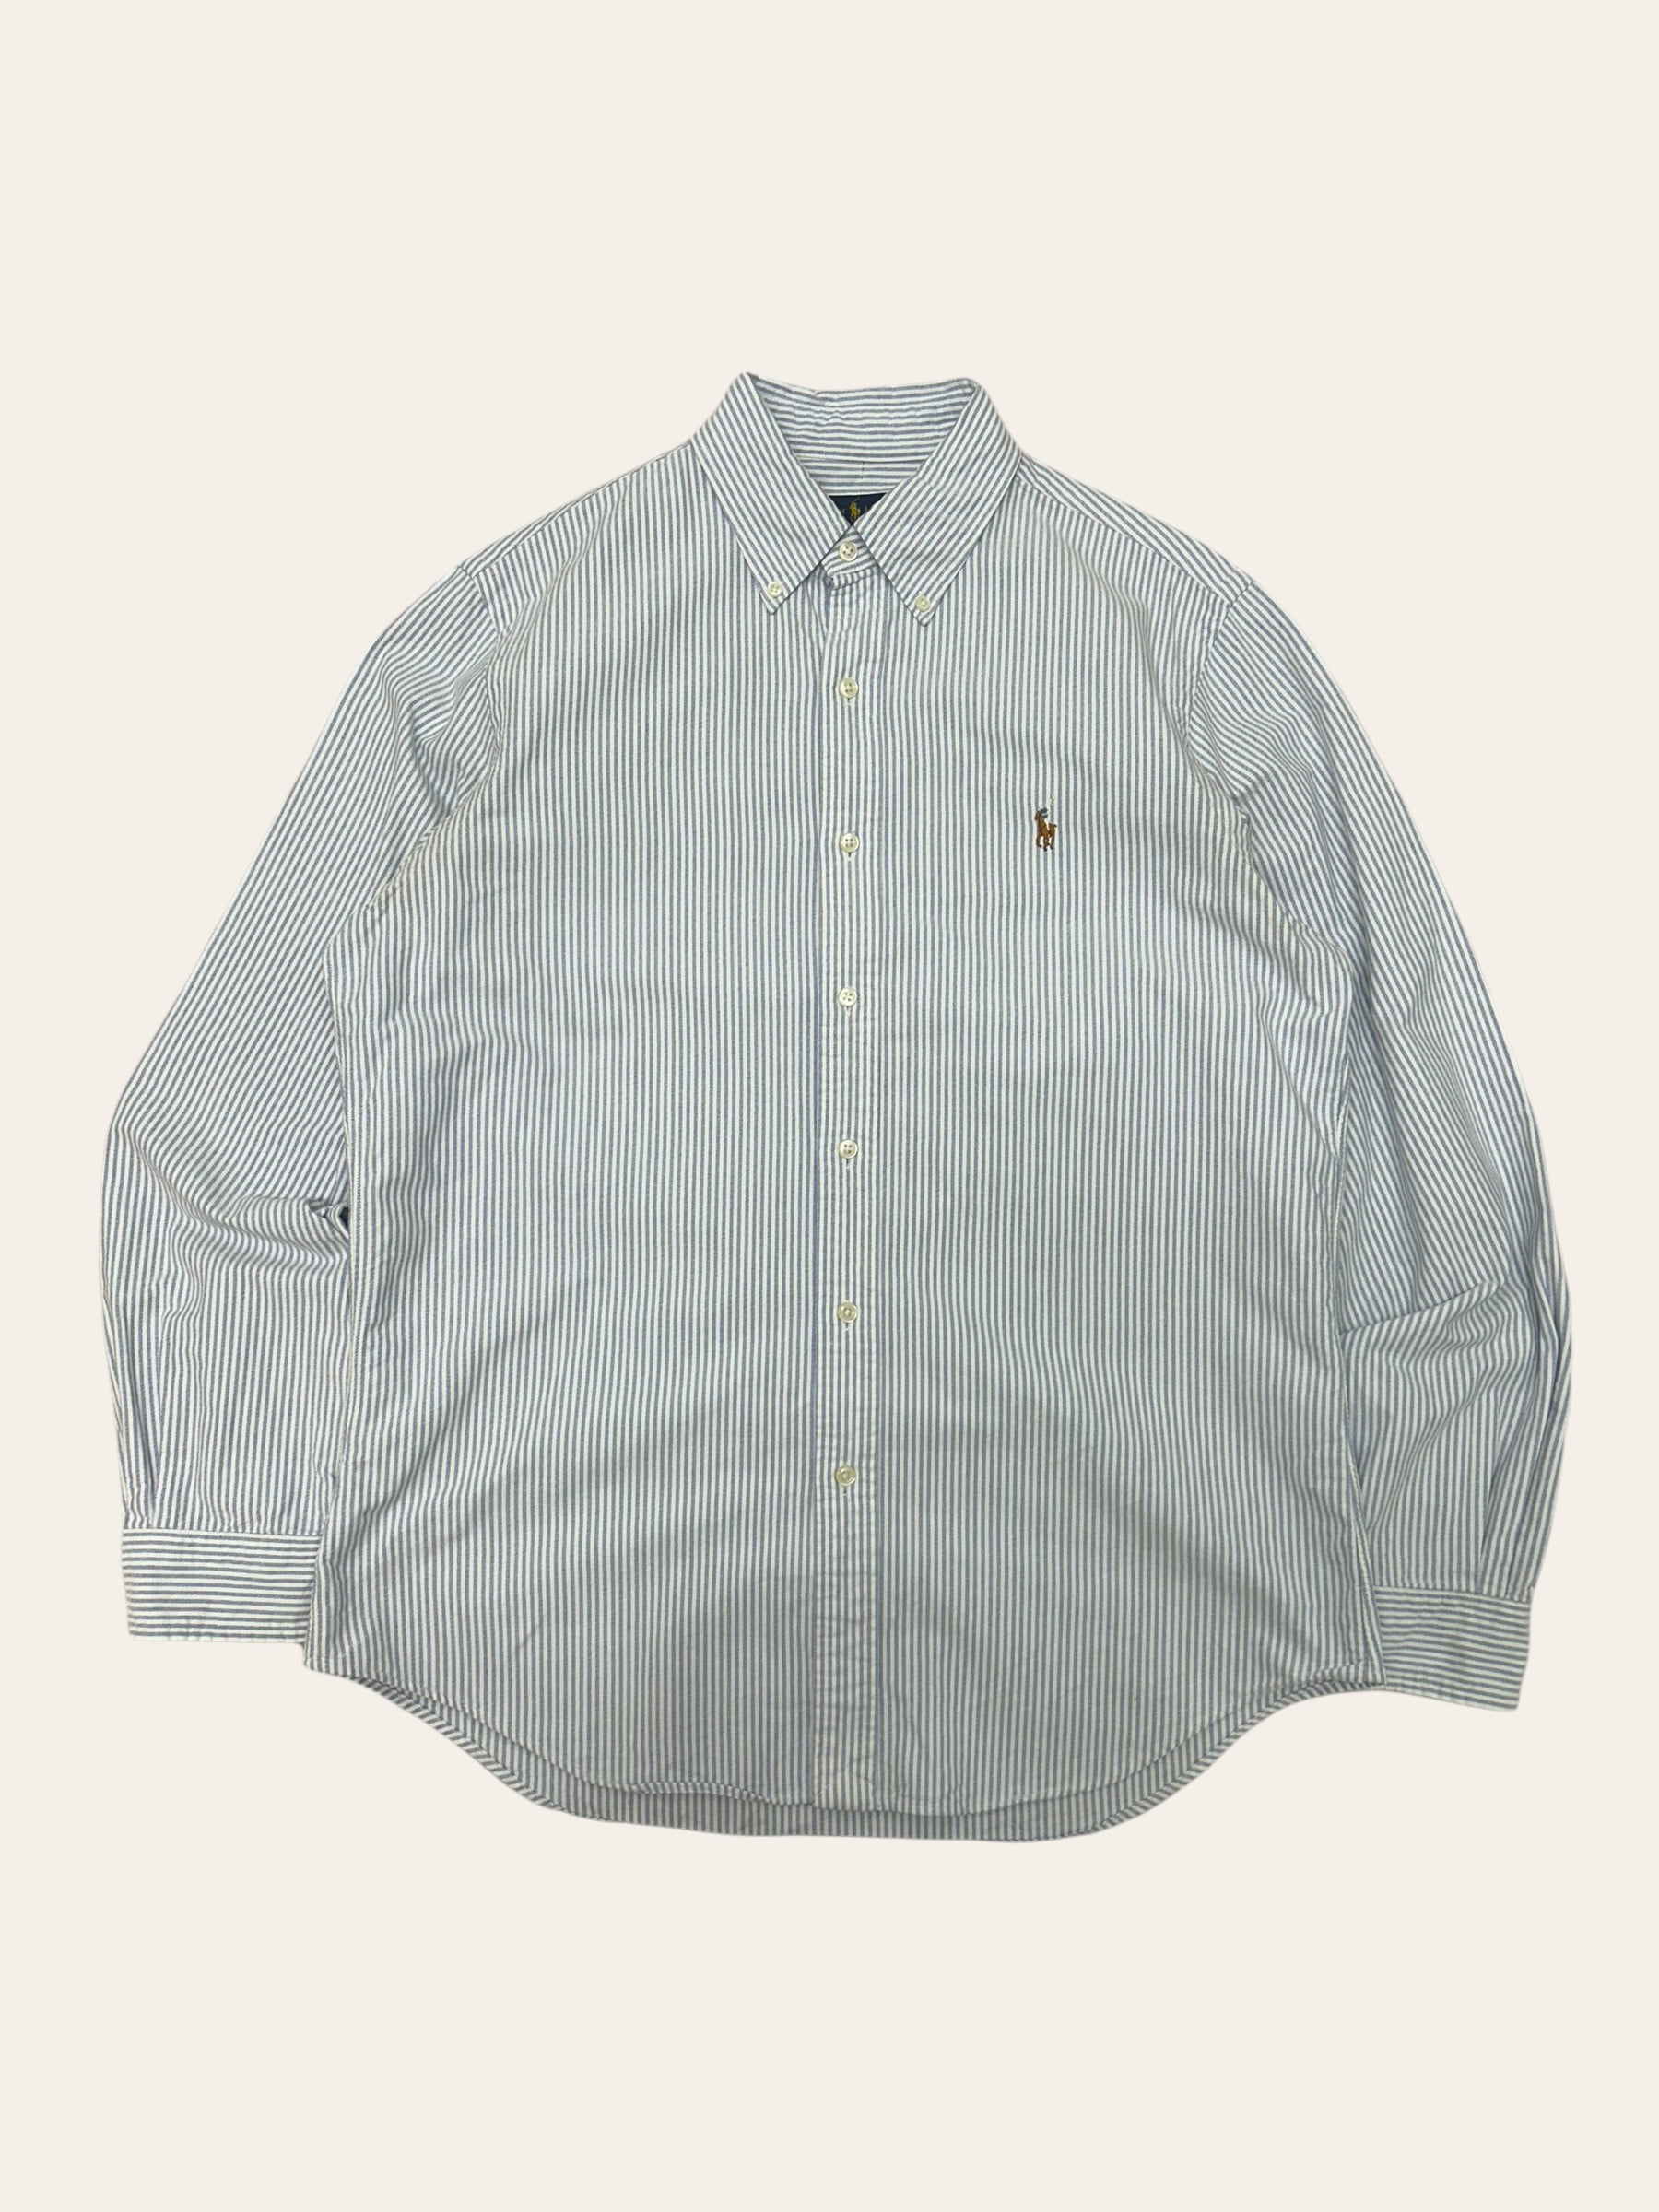 (From USA)Polo ralph lauren blue stripe oxford shirt M